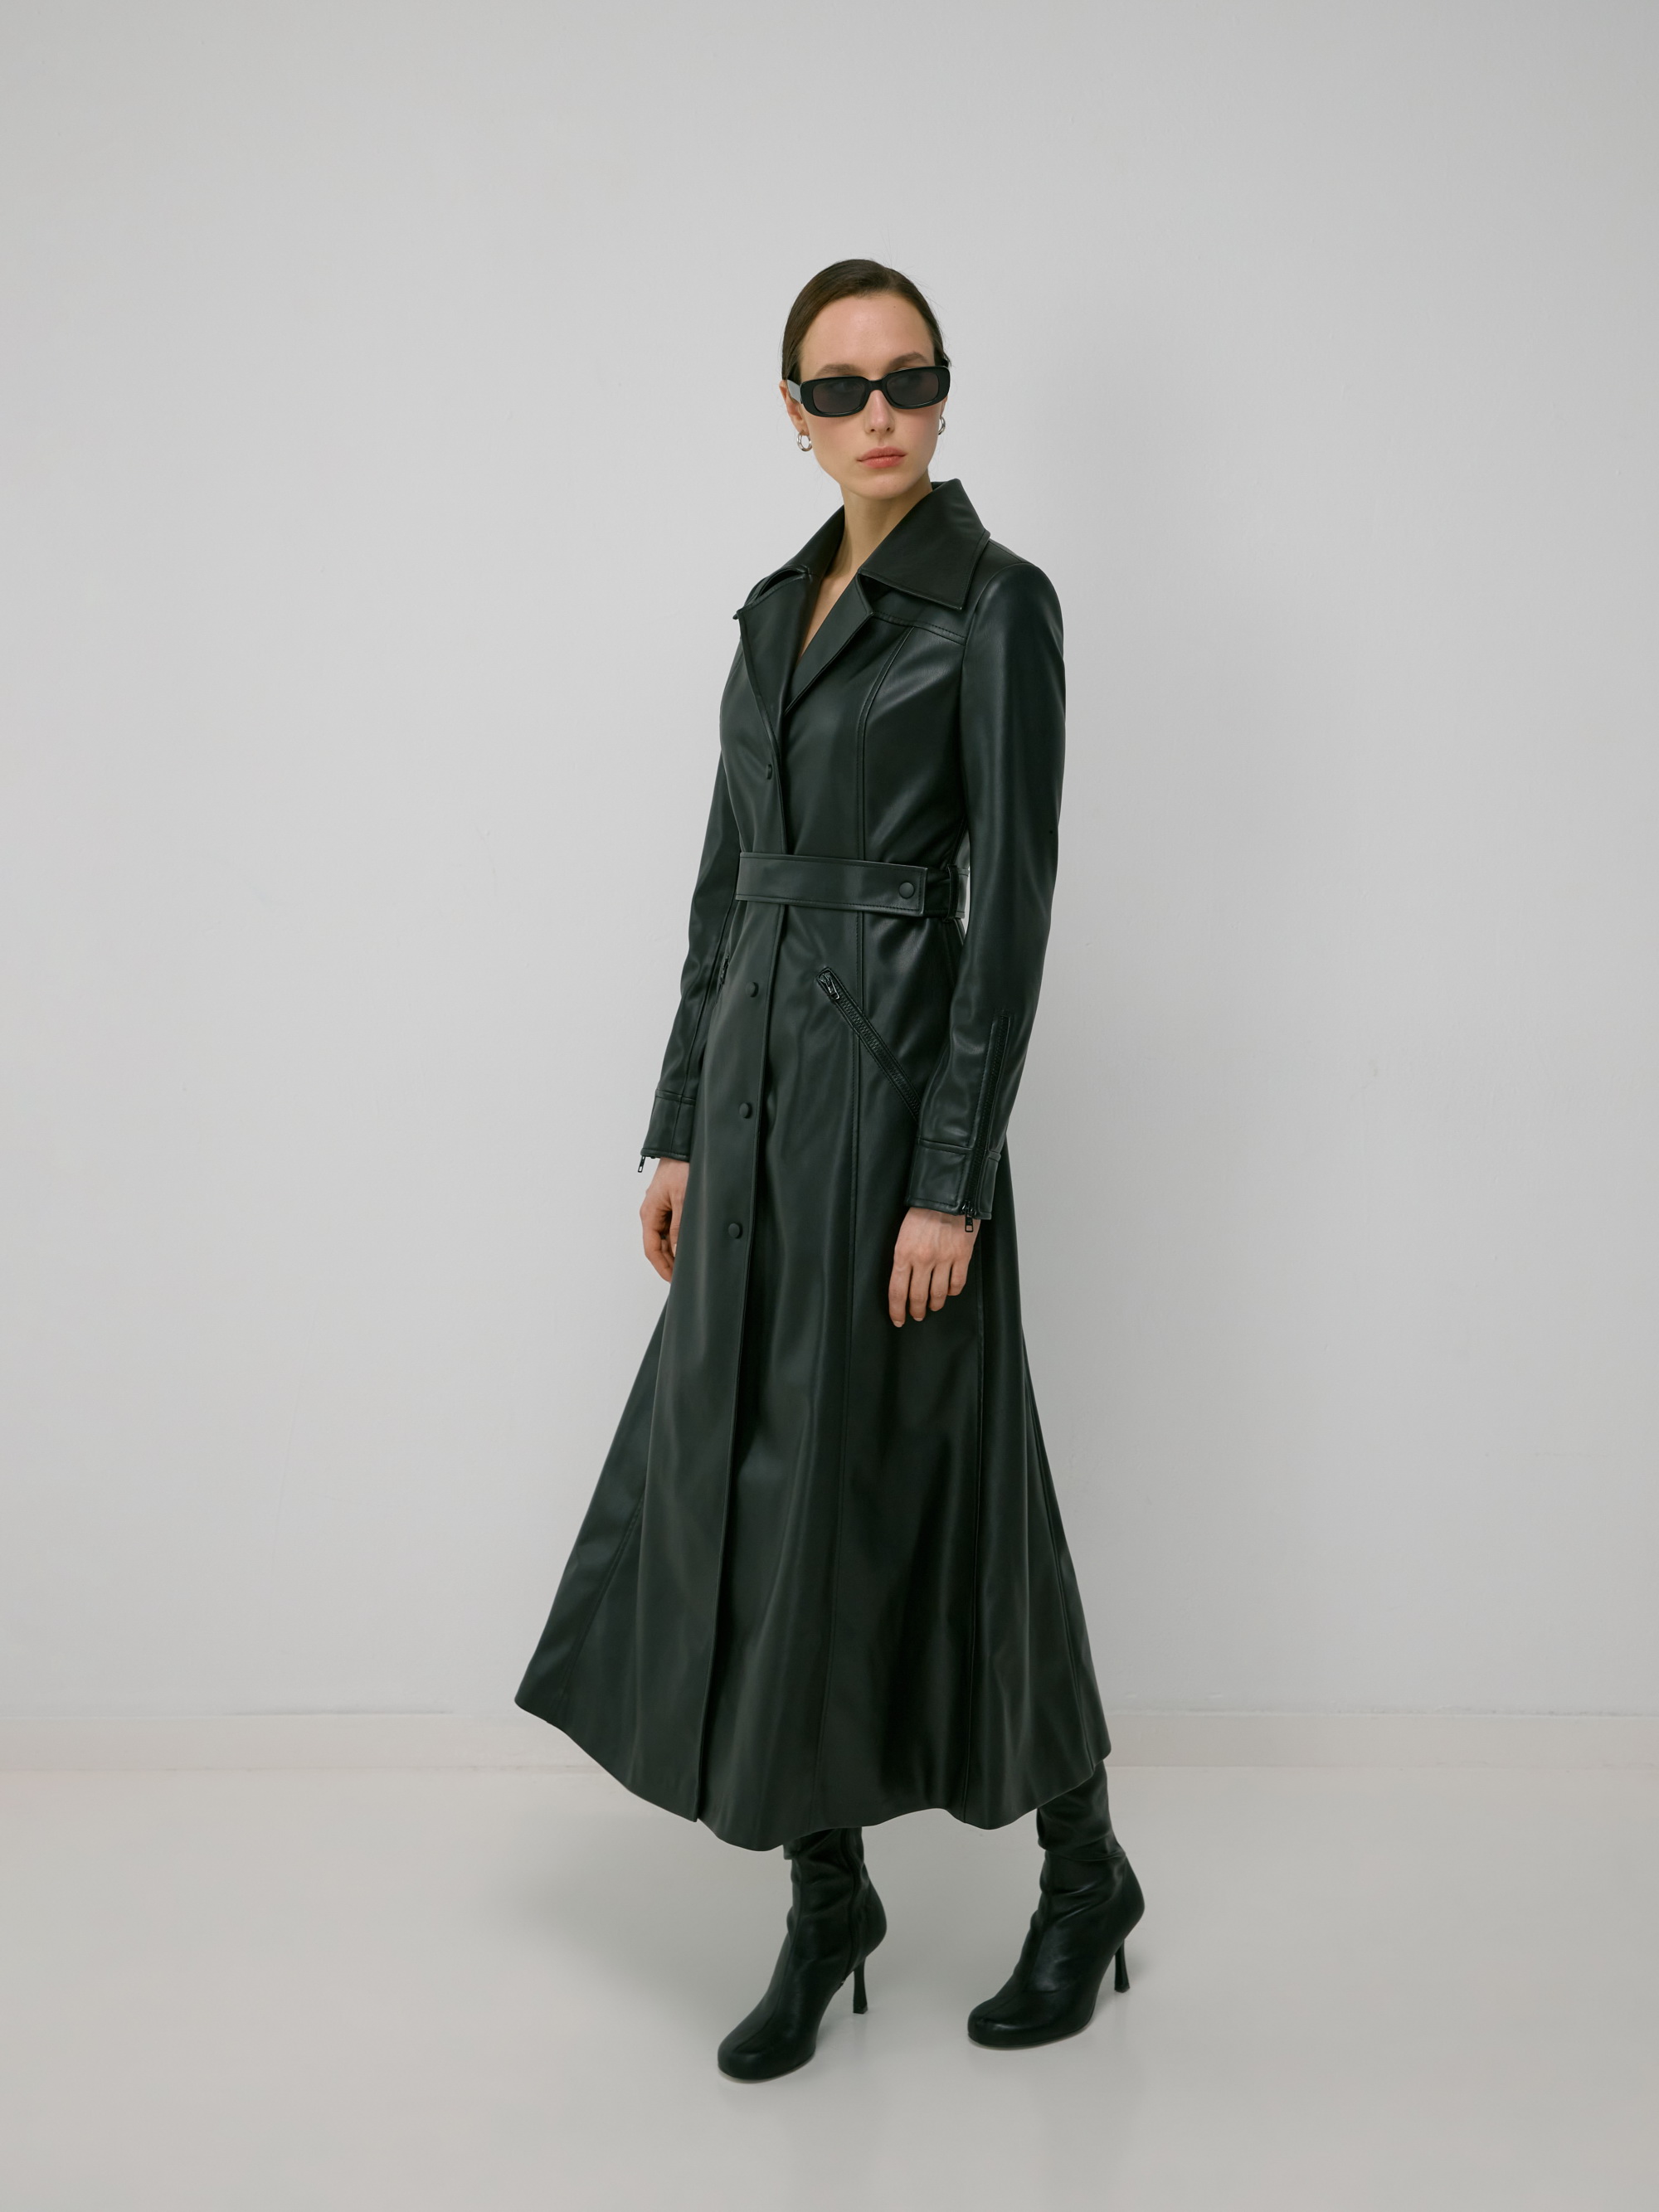 Raincoat, pattern №910 buy on-line